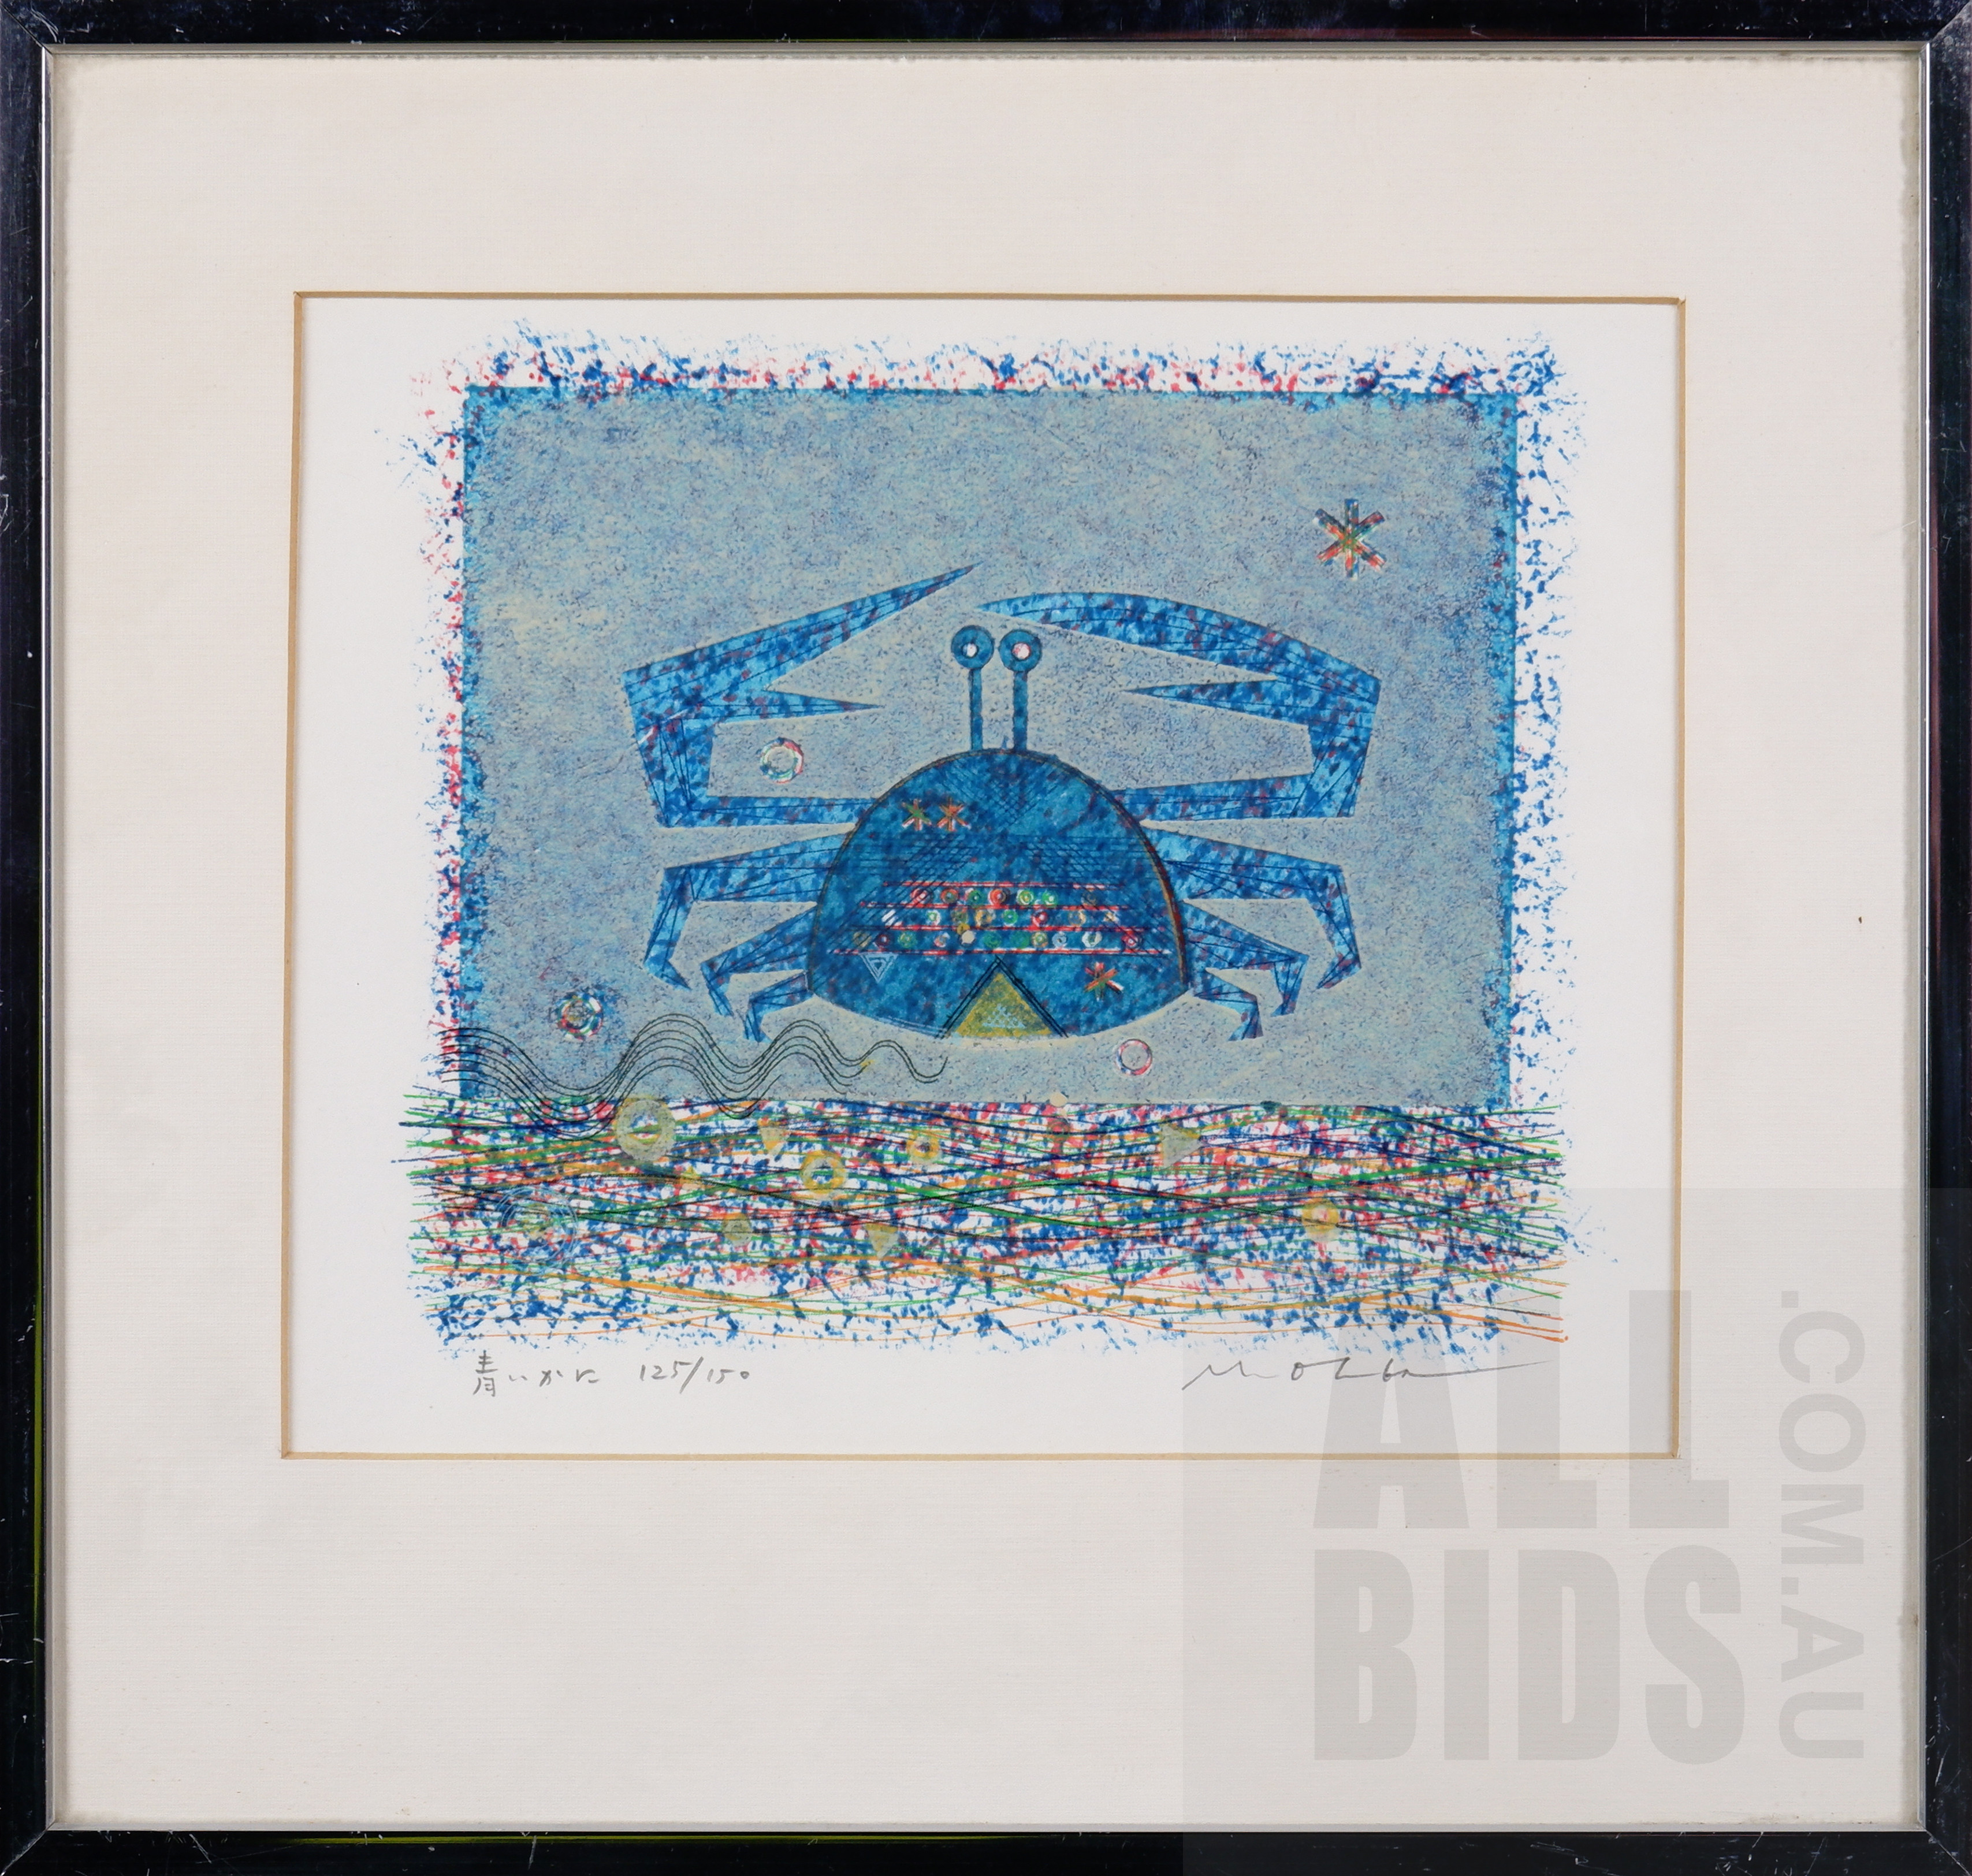 'Masao Oba (1928-2008, Japanese), Blue Crab, Screenprint, 32 x 28 cm (image size)'